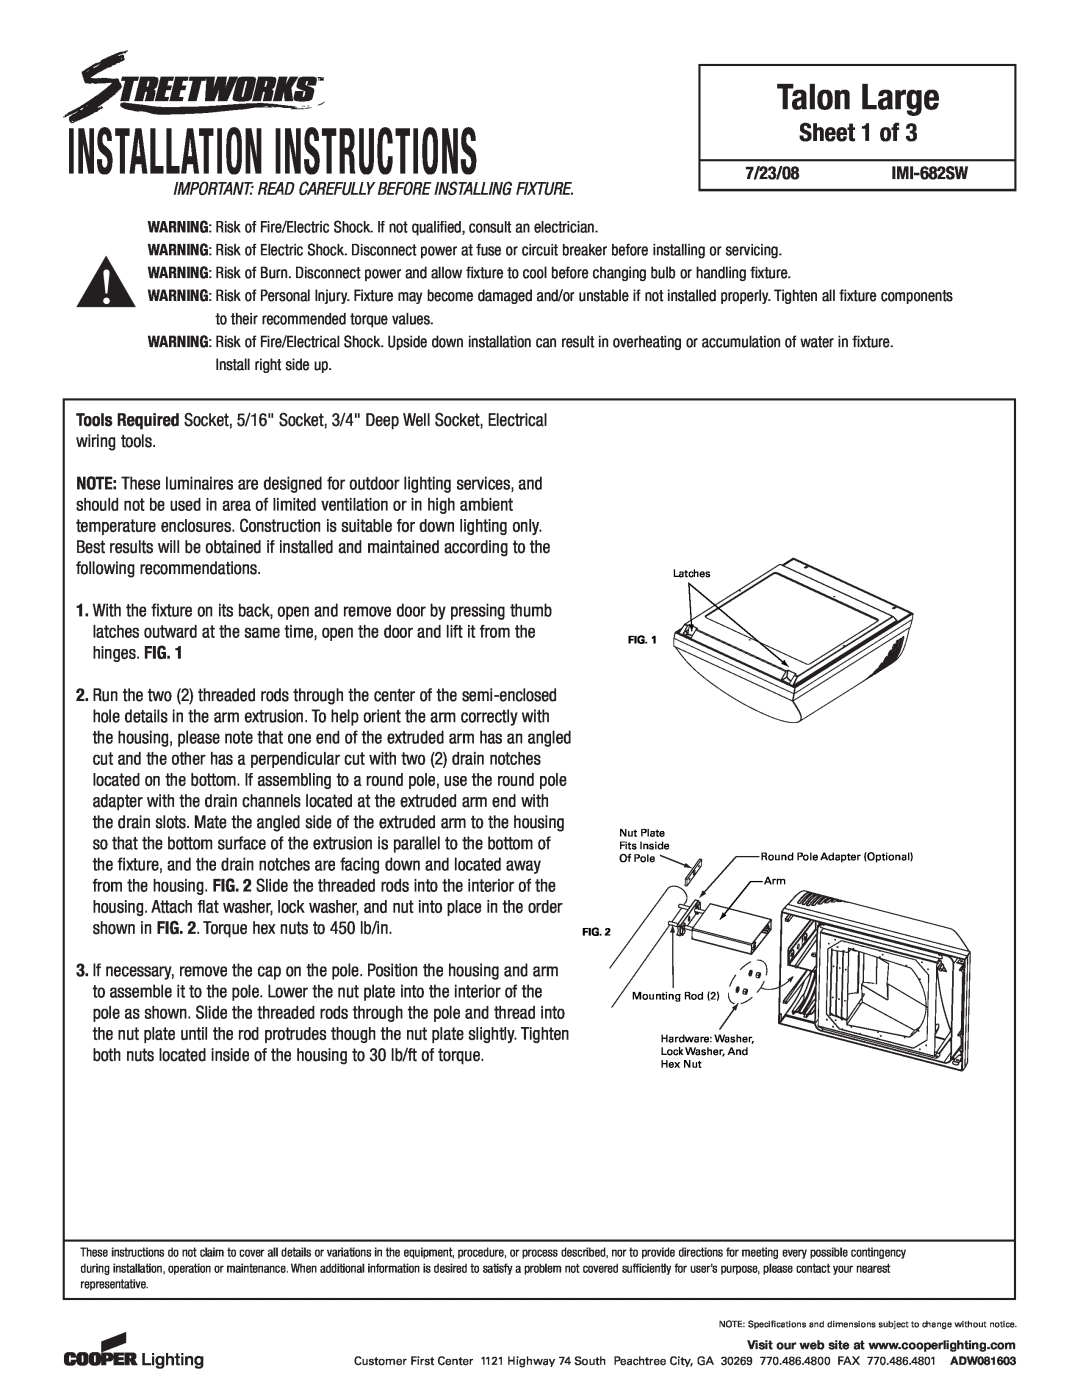 Cooper Lighting installation instructions Installation Instructions, Talon Large, Sheet 1 of, 7/23/08IMI-682SW 